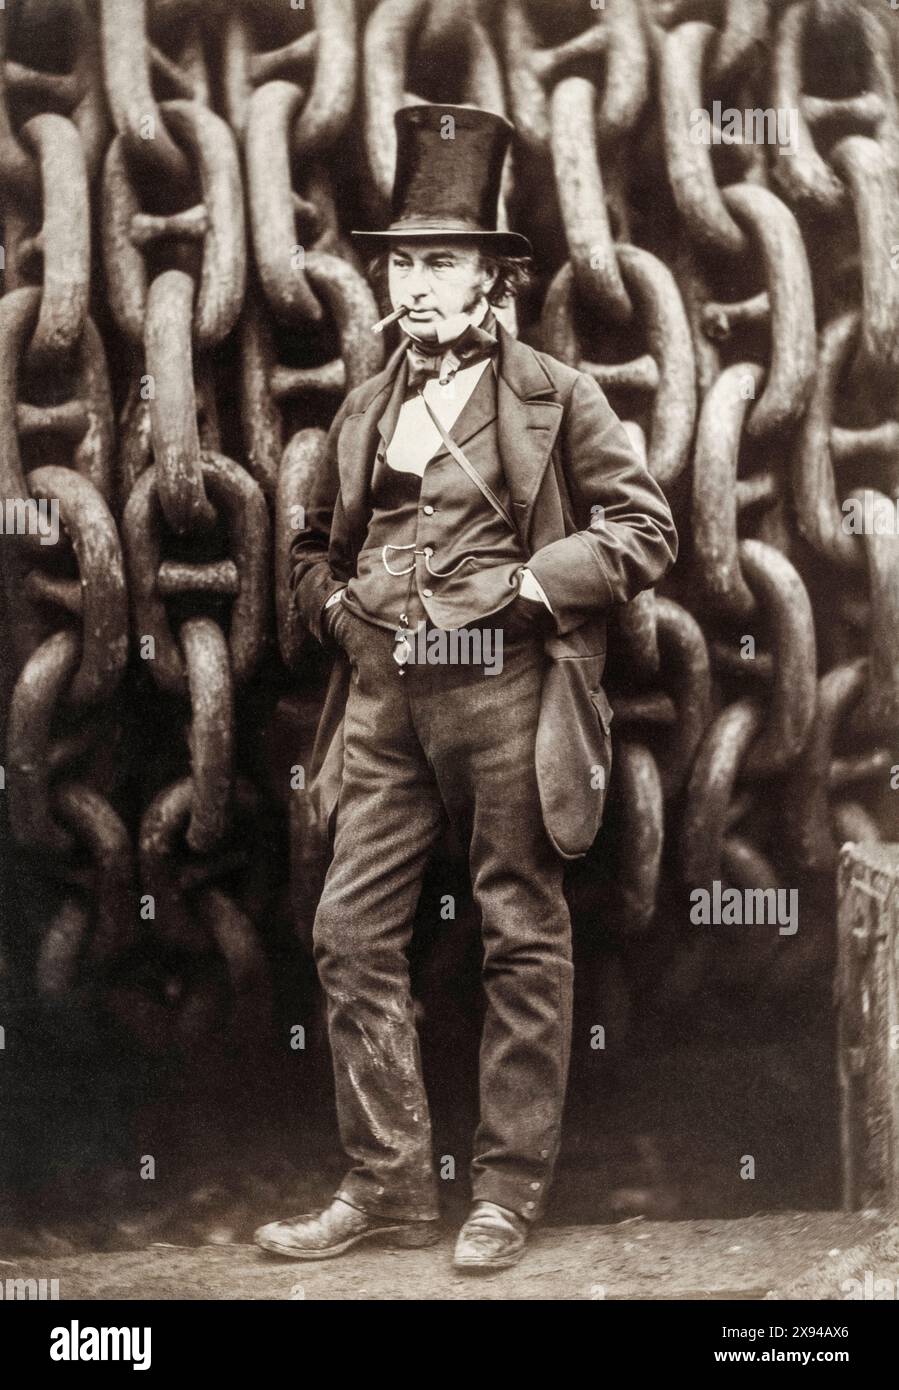 Isambard Kingdom Brunel (1806-1859) et les chaînes de lancement de la SS Great Eastern, portrait de Robert Howlett, 1857 Banque D'Images